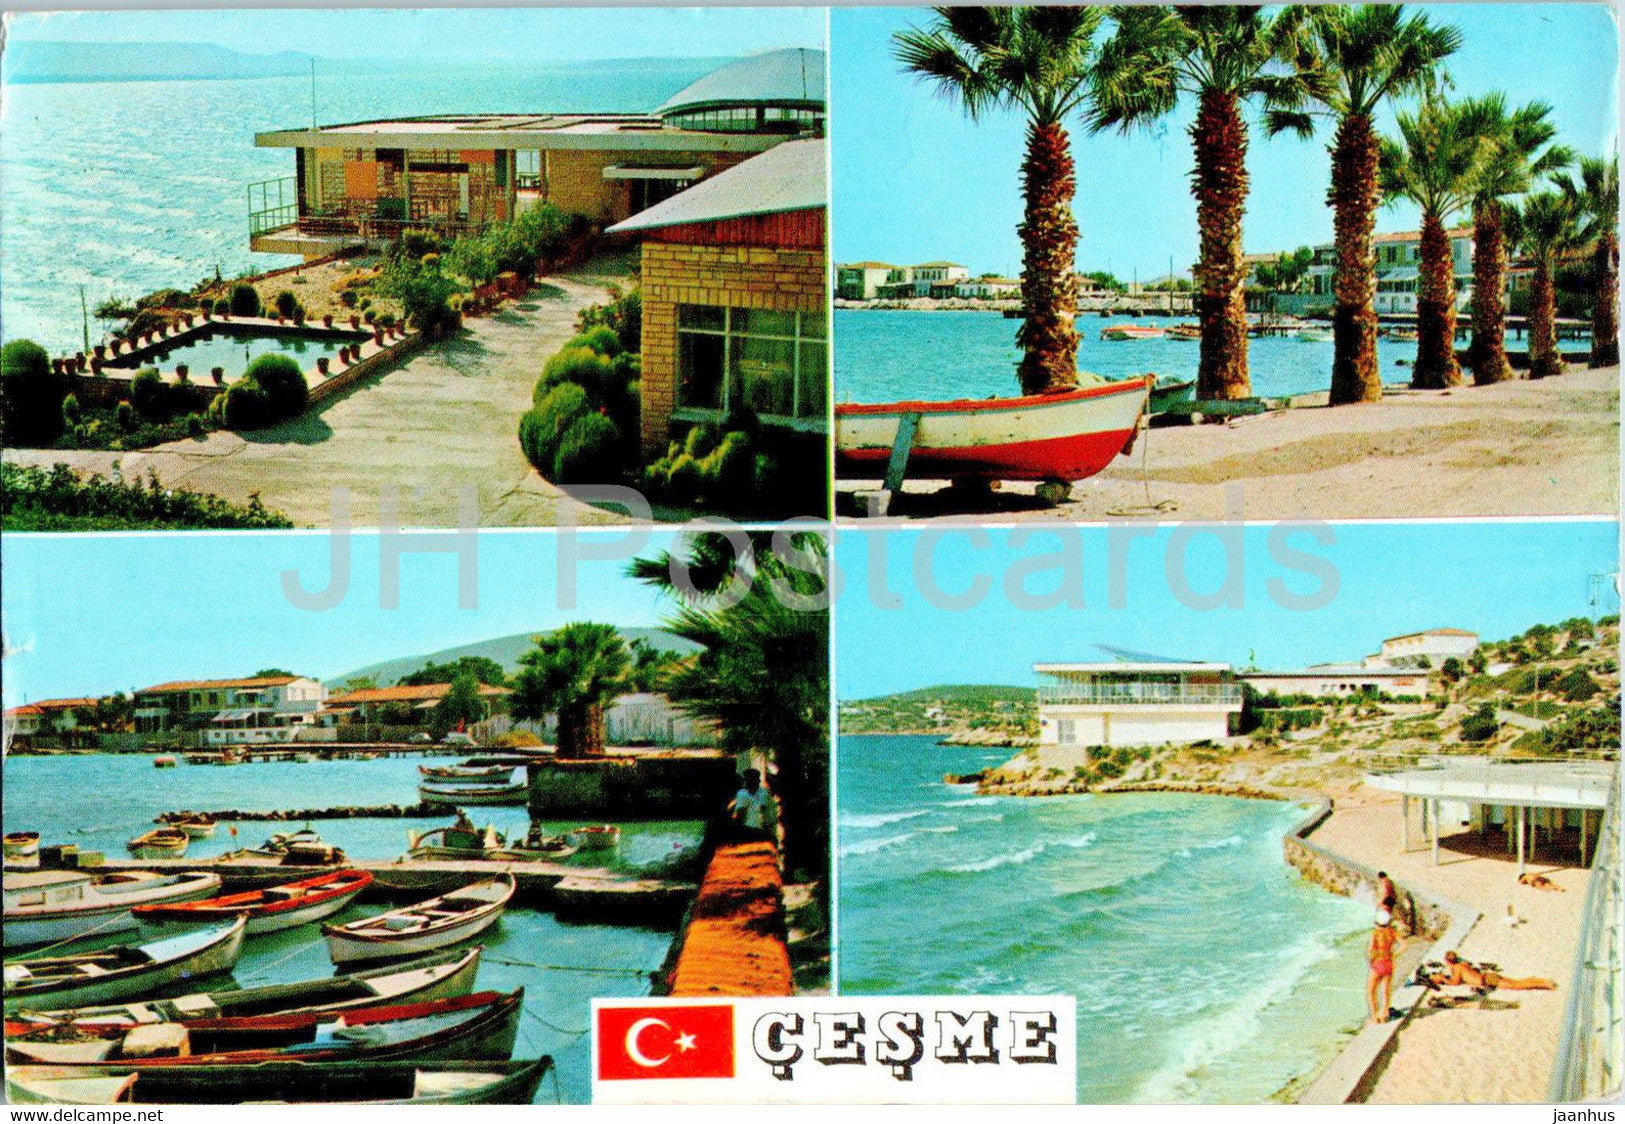 Cesme - Izmir - Otel Balin ve Cesme'den dort gorunus - hotel - boat - multiview - 1981 - Turkey - used - JH Postcards